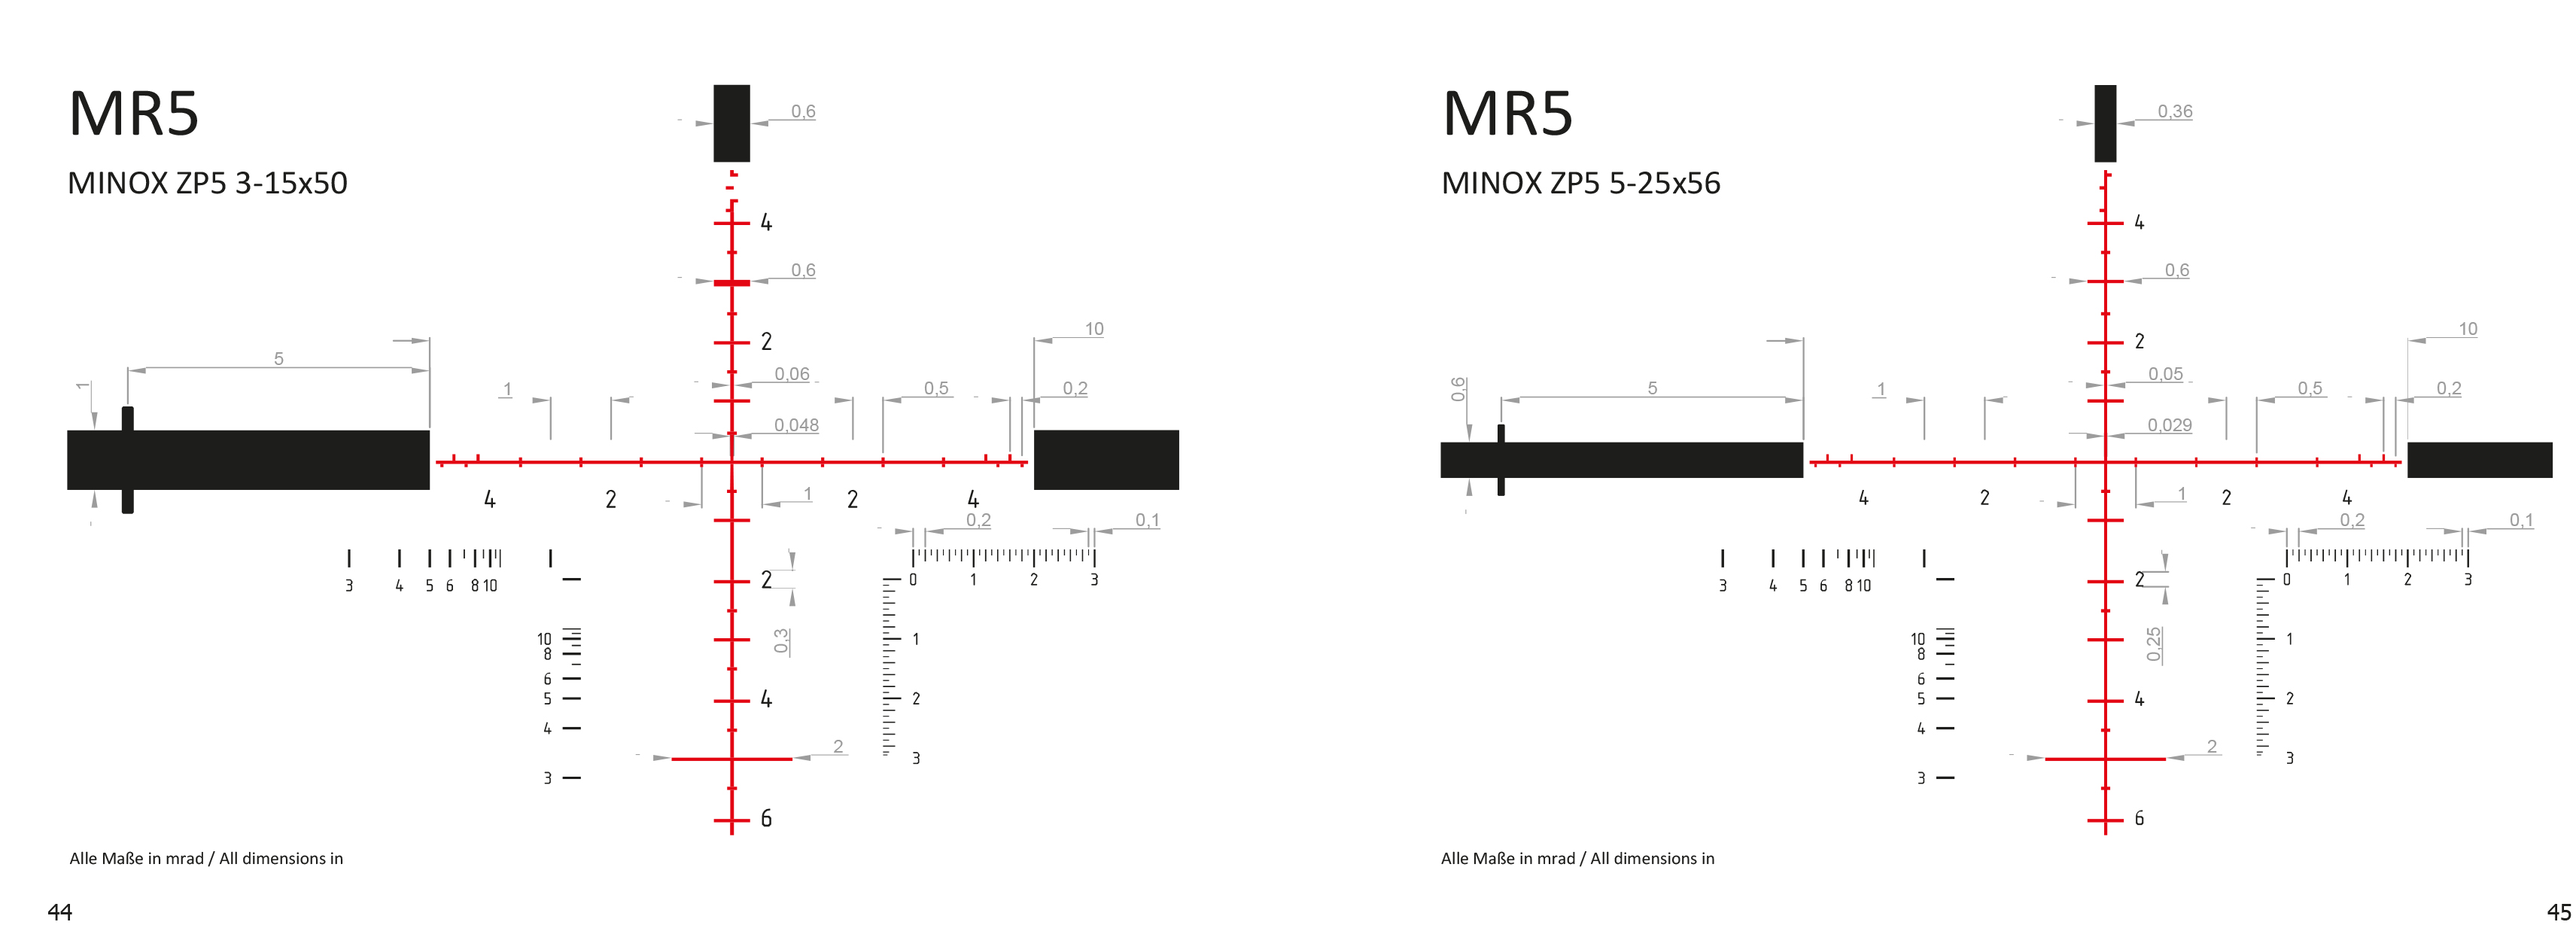 puskohlad-minox-zp5-5-25x56-mr5